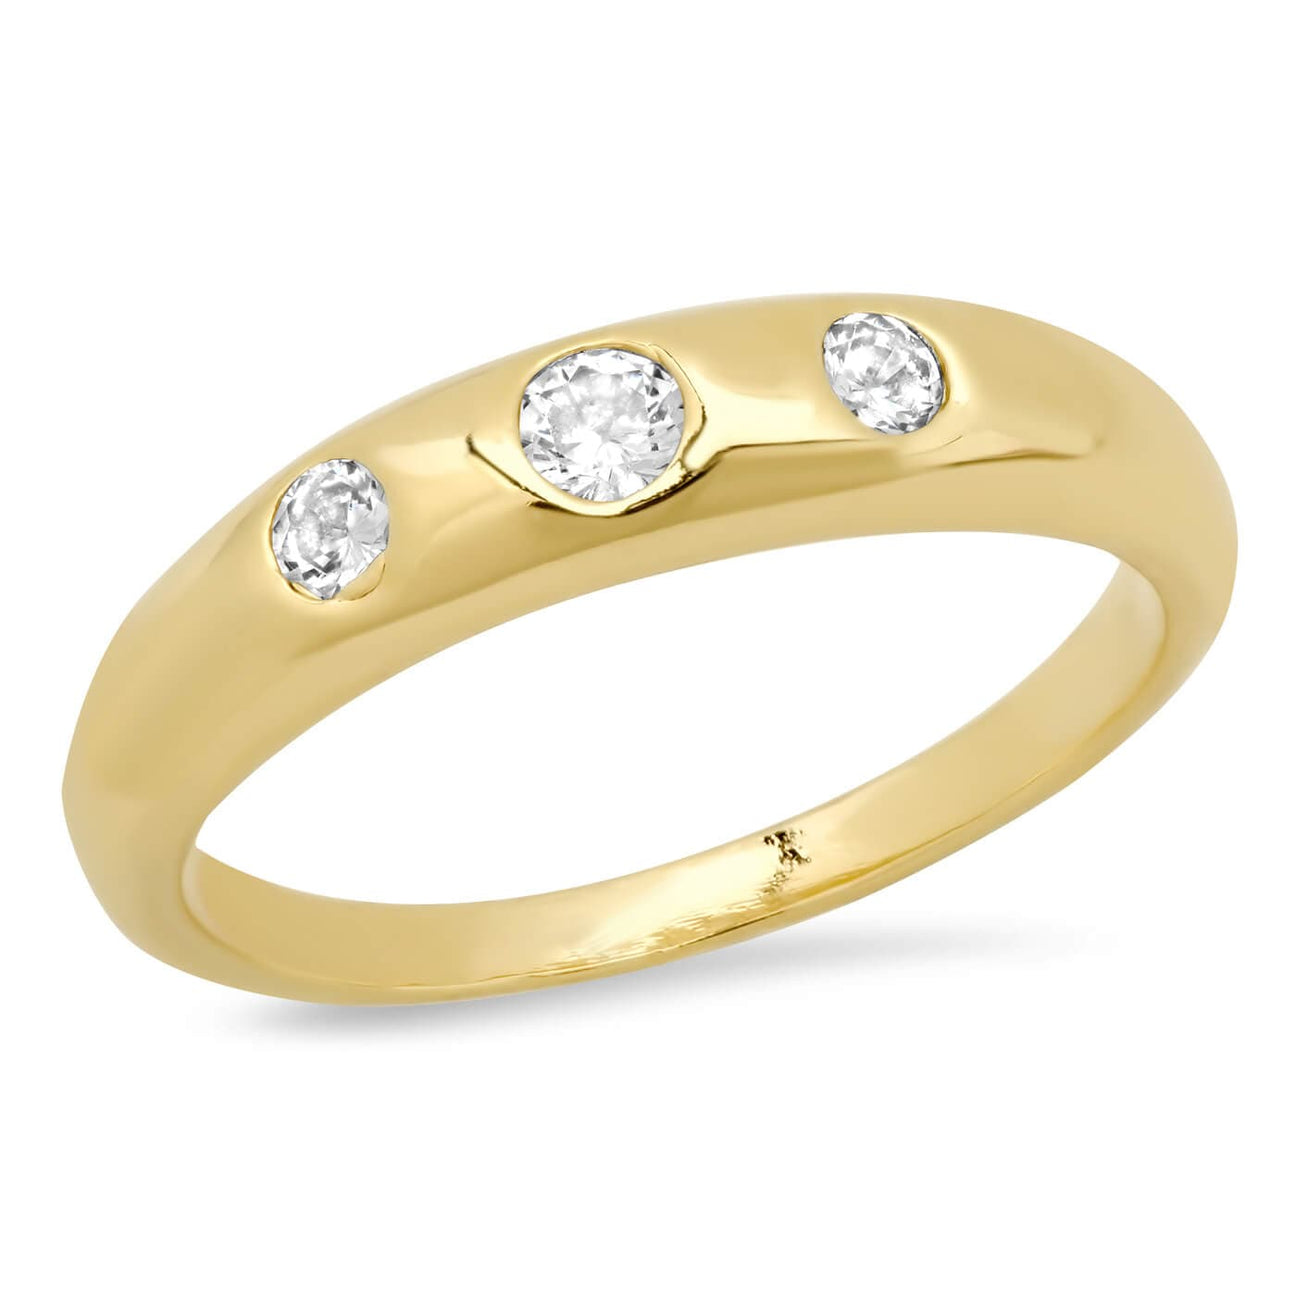 TAI Jewelry | All Rings Collection – TAI JEWELRY